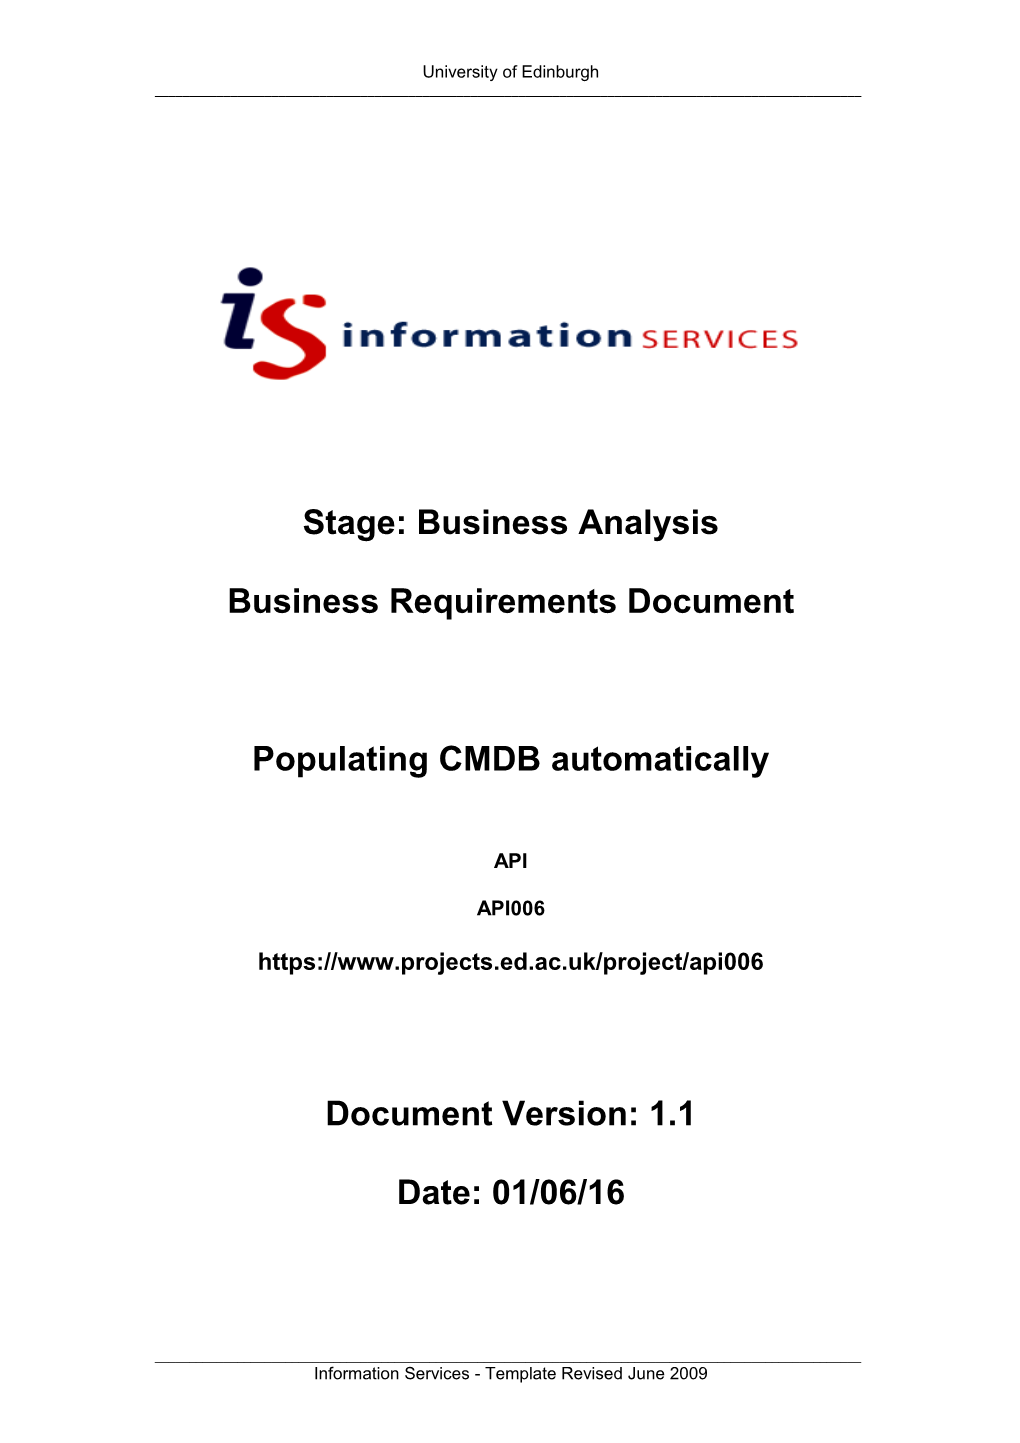 Business Analysis: Business Requirements Documentapi006: Populating CMDB Automatically